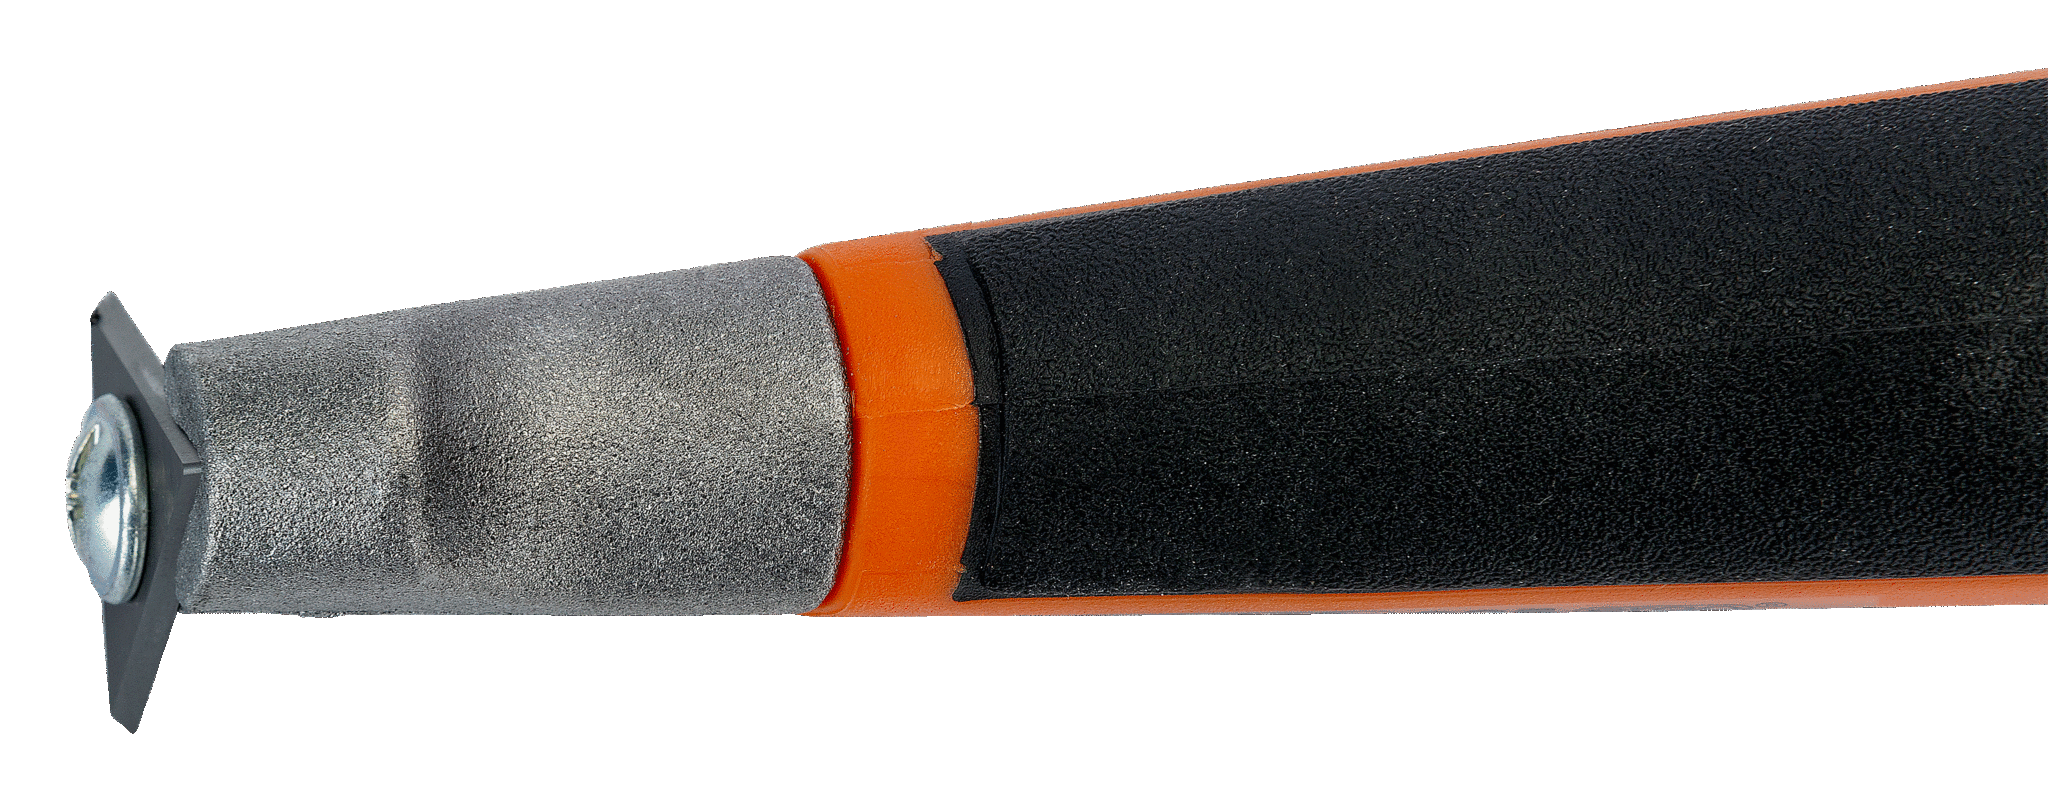 Paint Scraper 25mm Triangular Blade Ergo Universal 625 by BAHCO